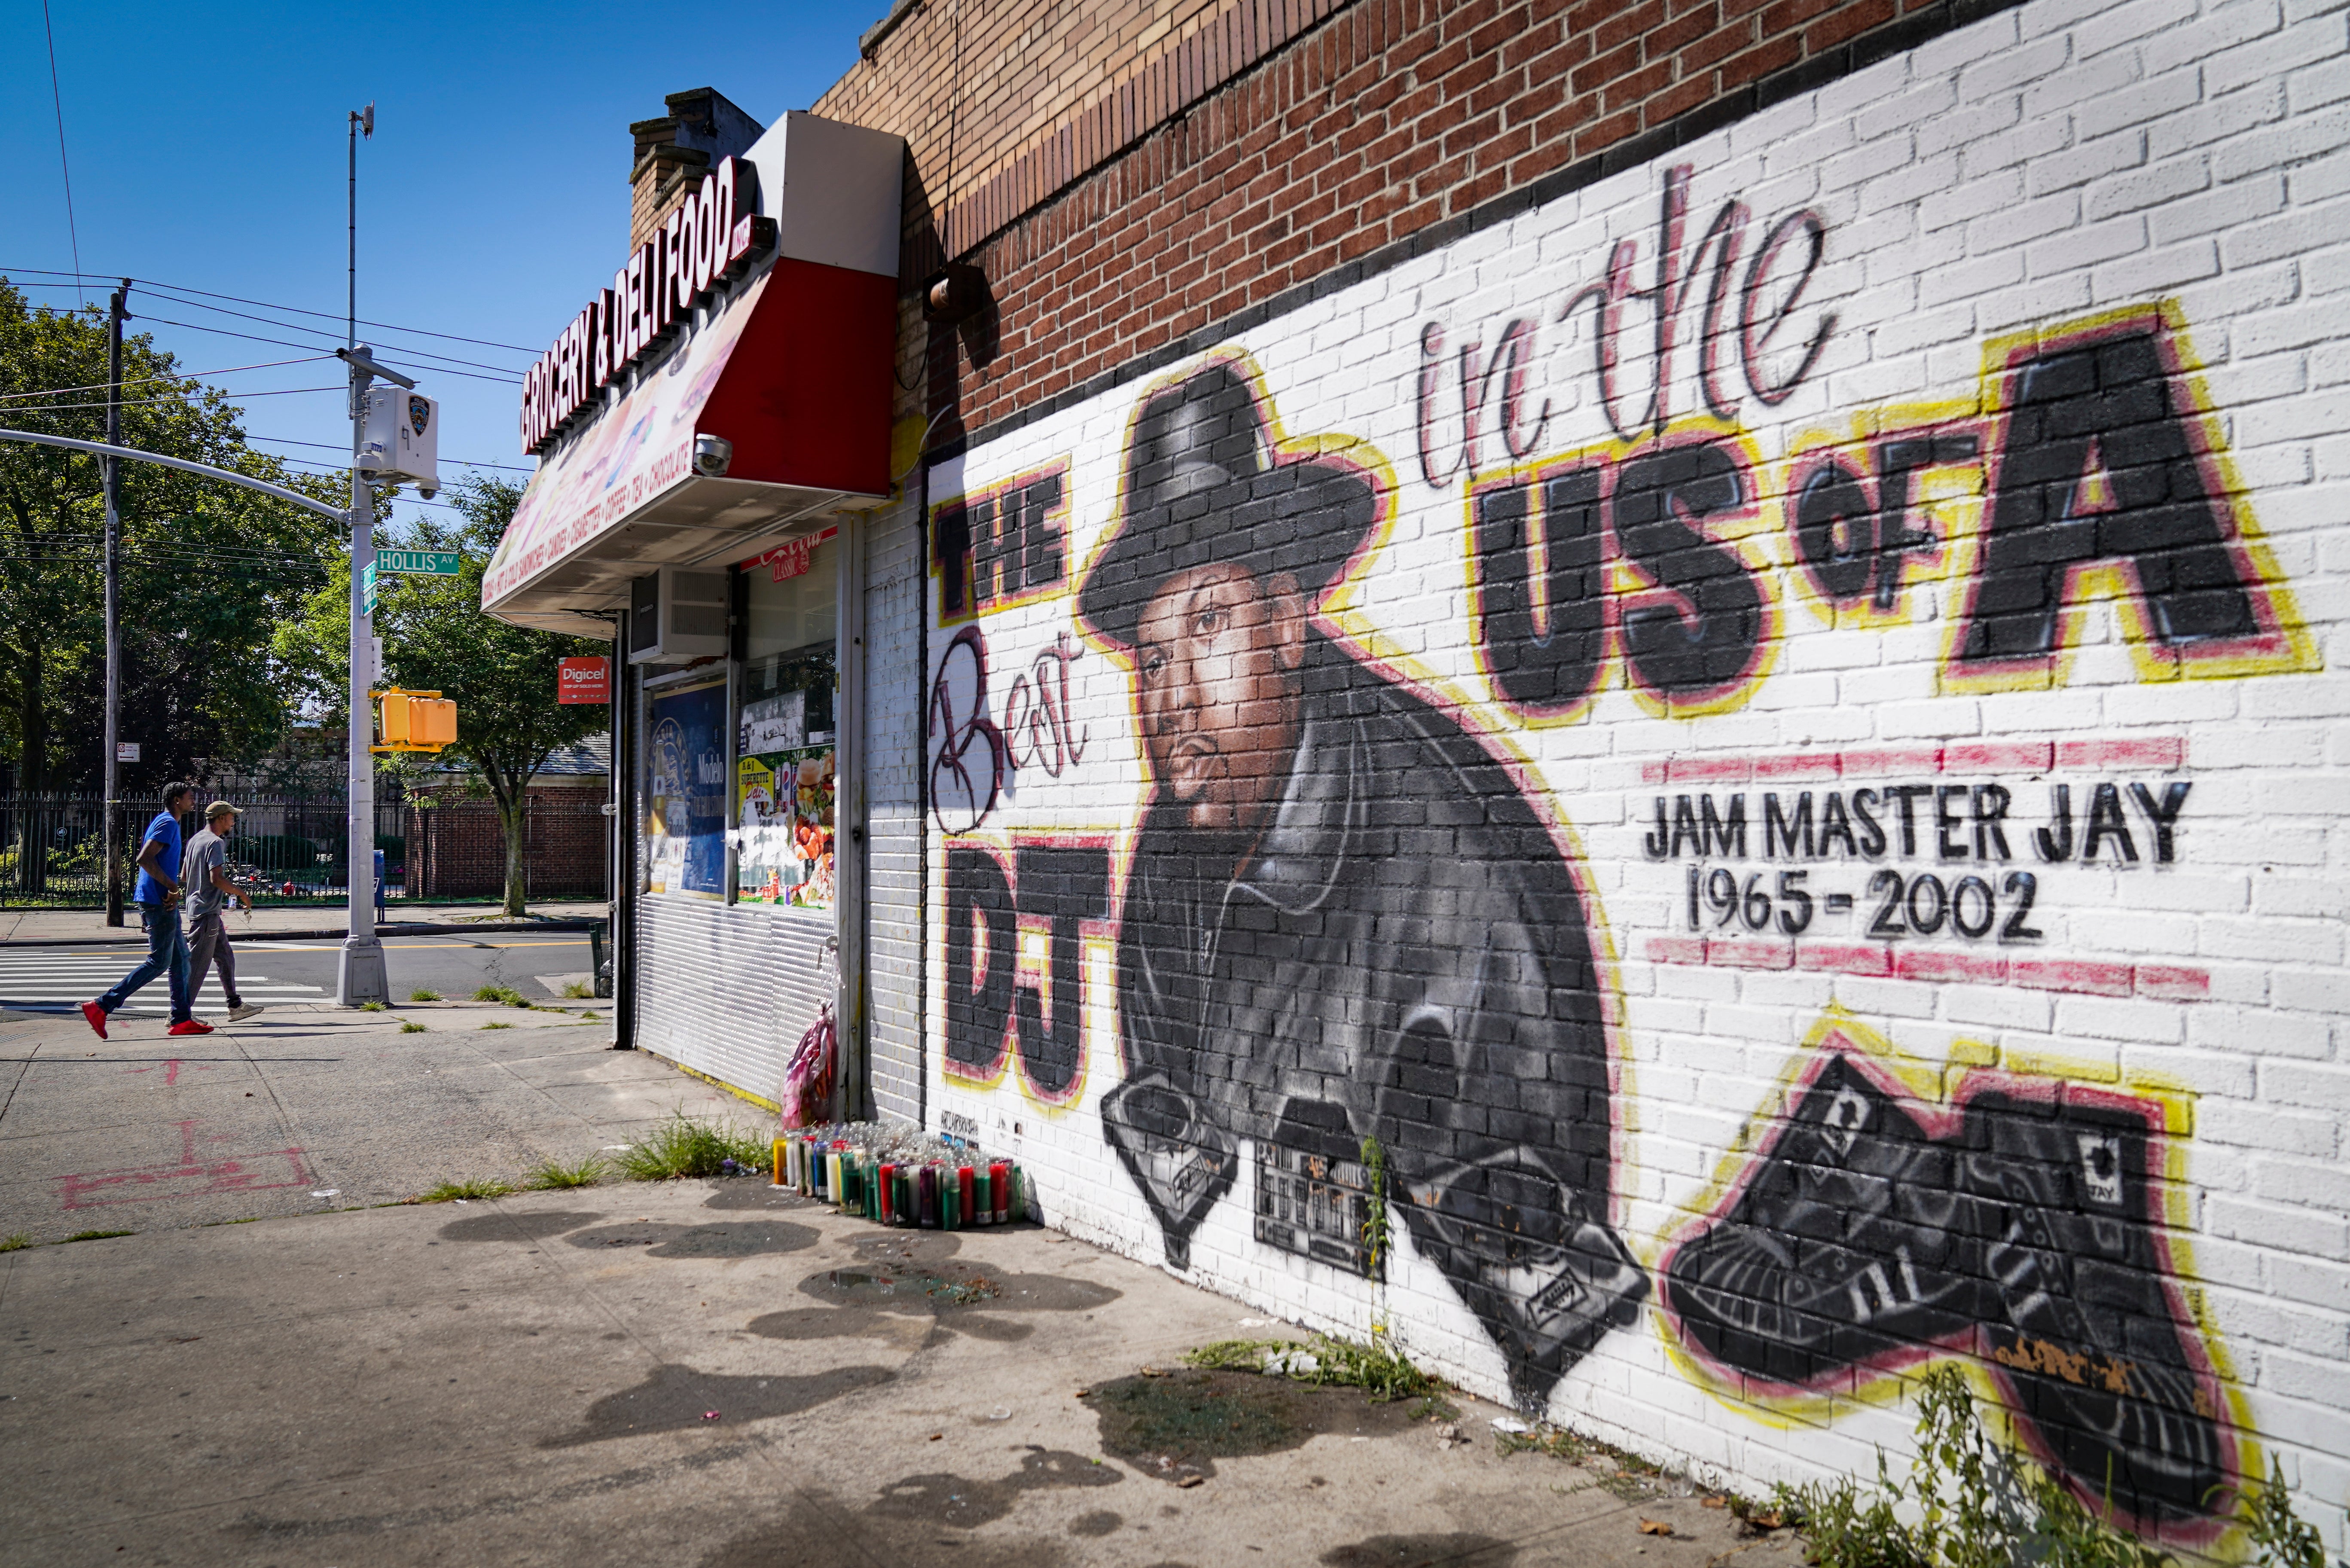 A mural for Jam Master Jay in New York